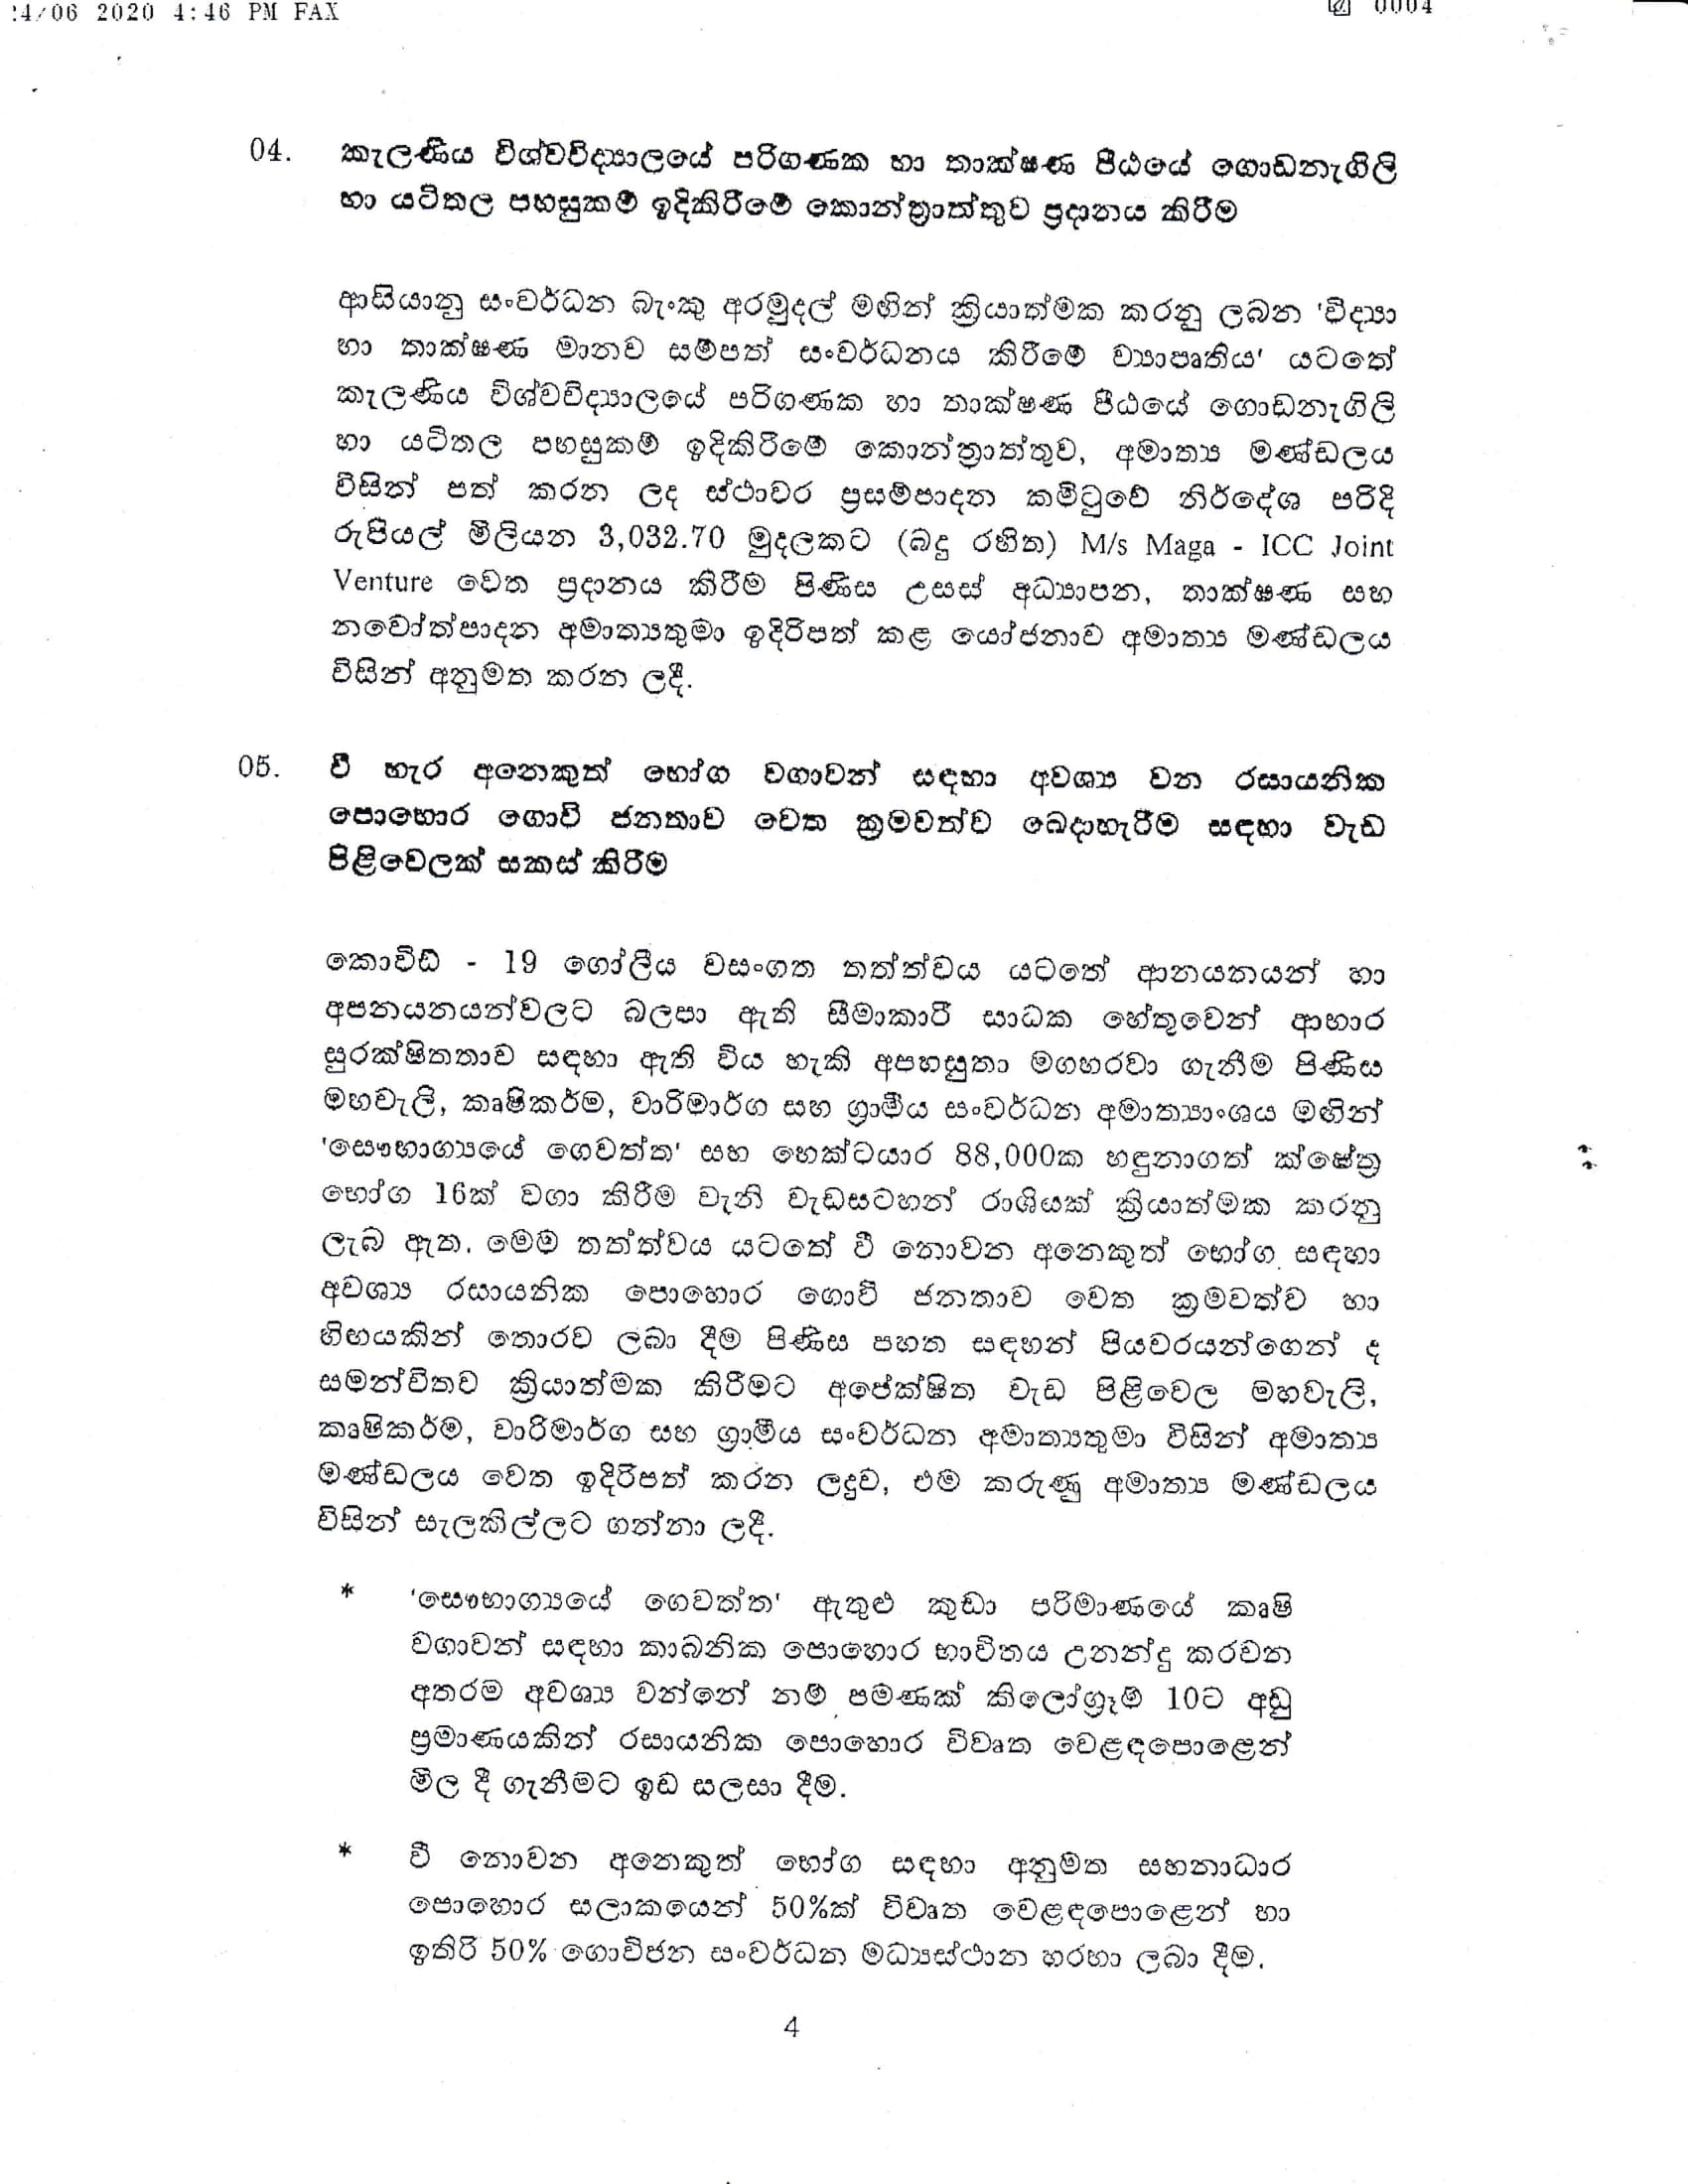 Cabinet Decision 2020 06 24 Sinhala New 4